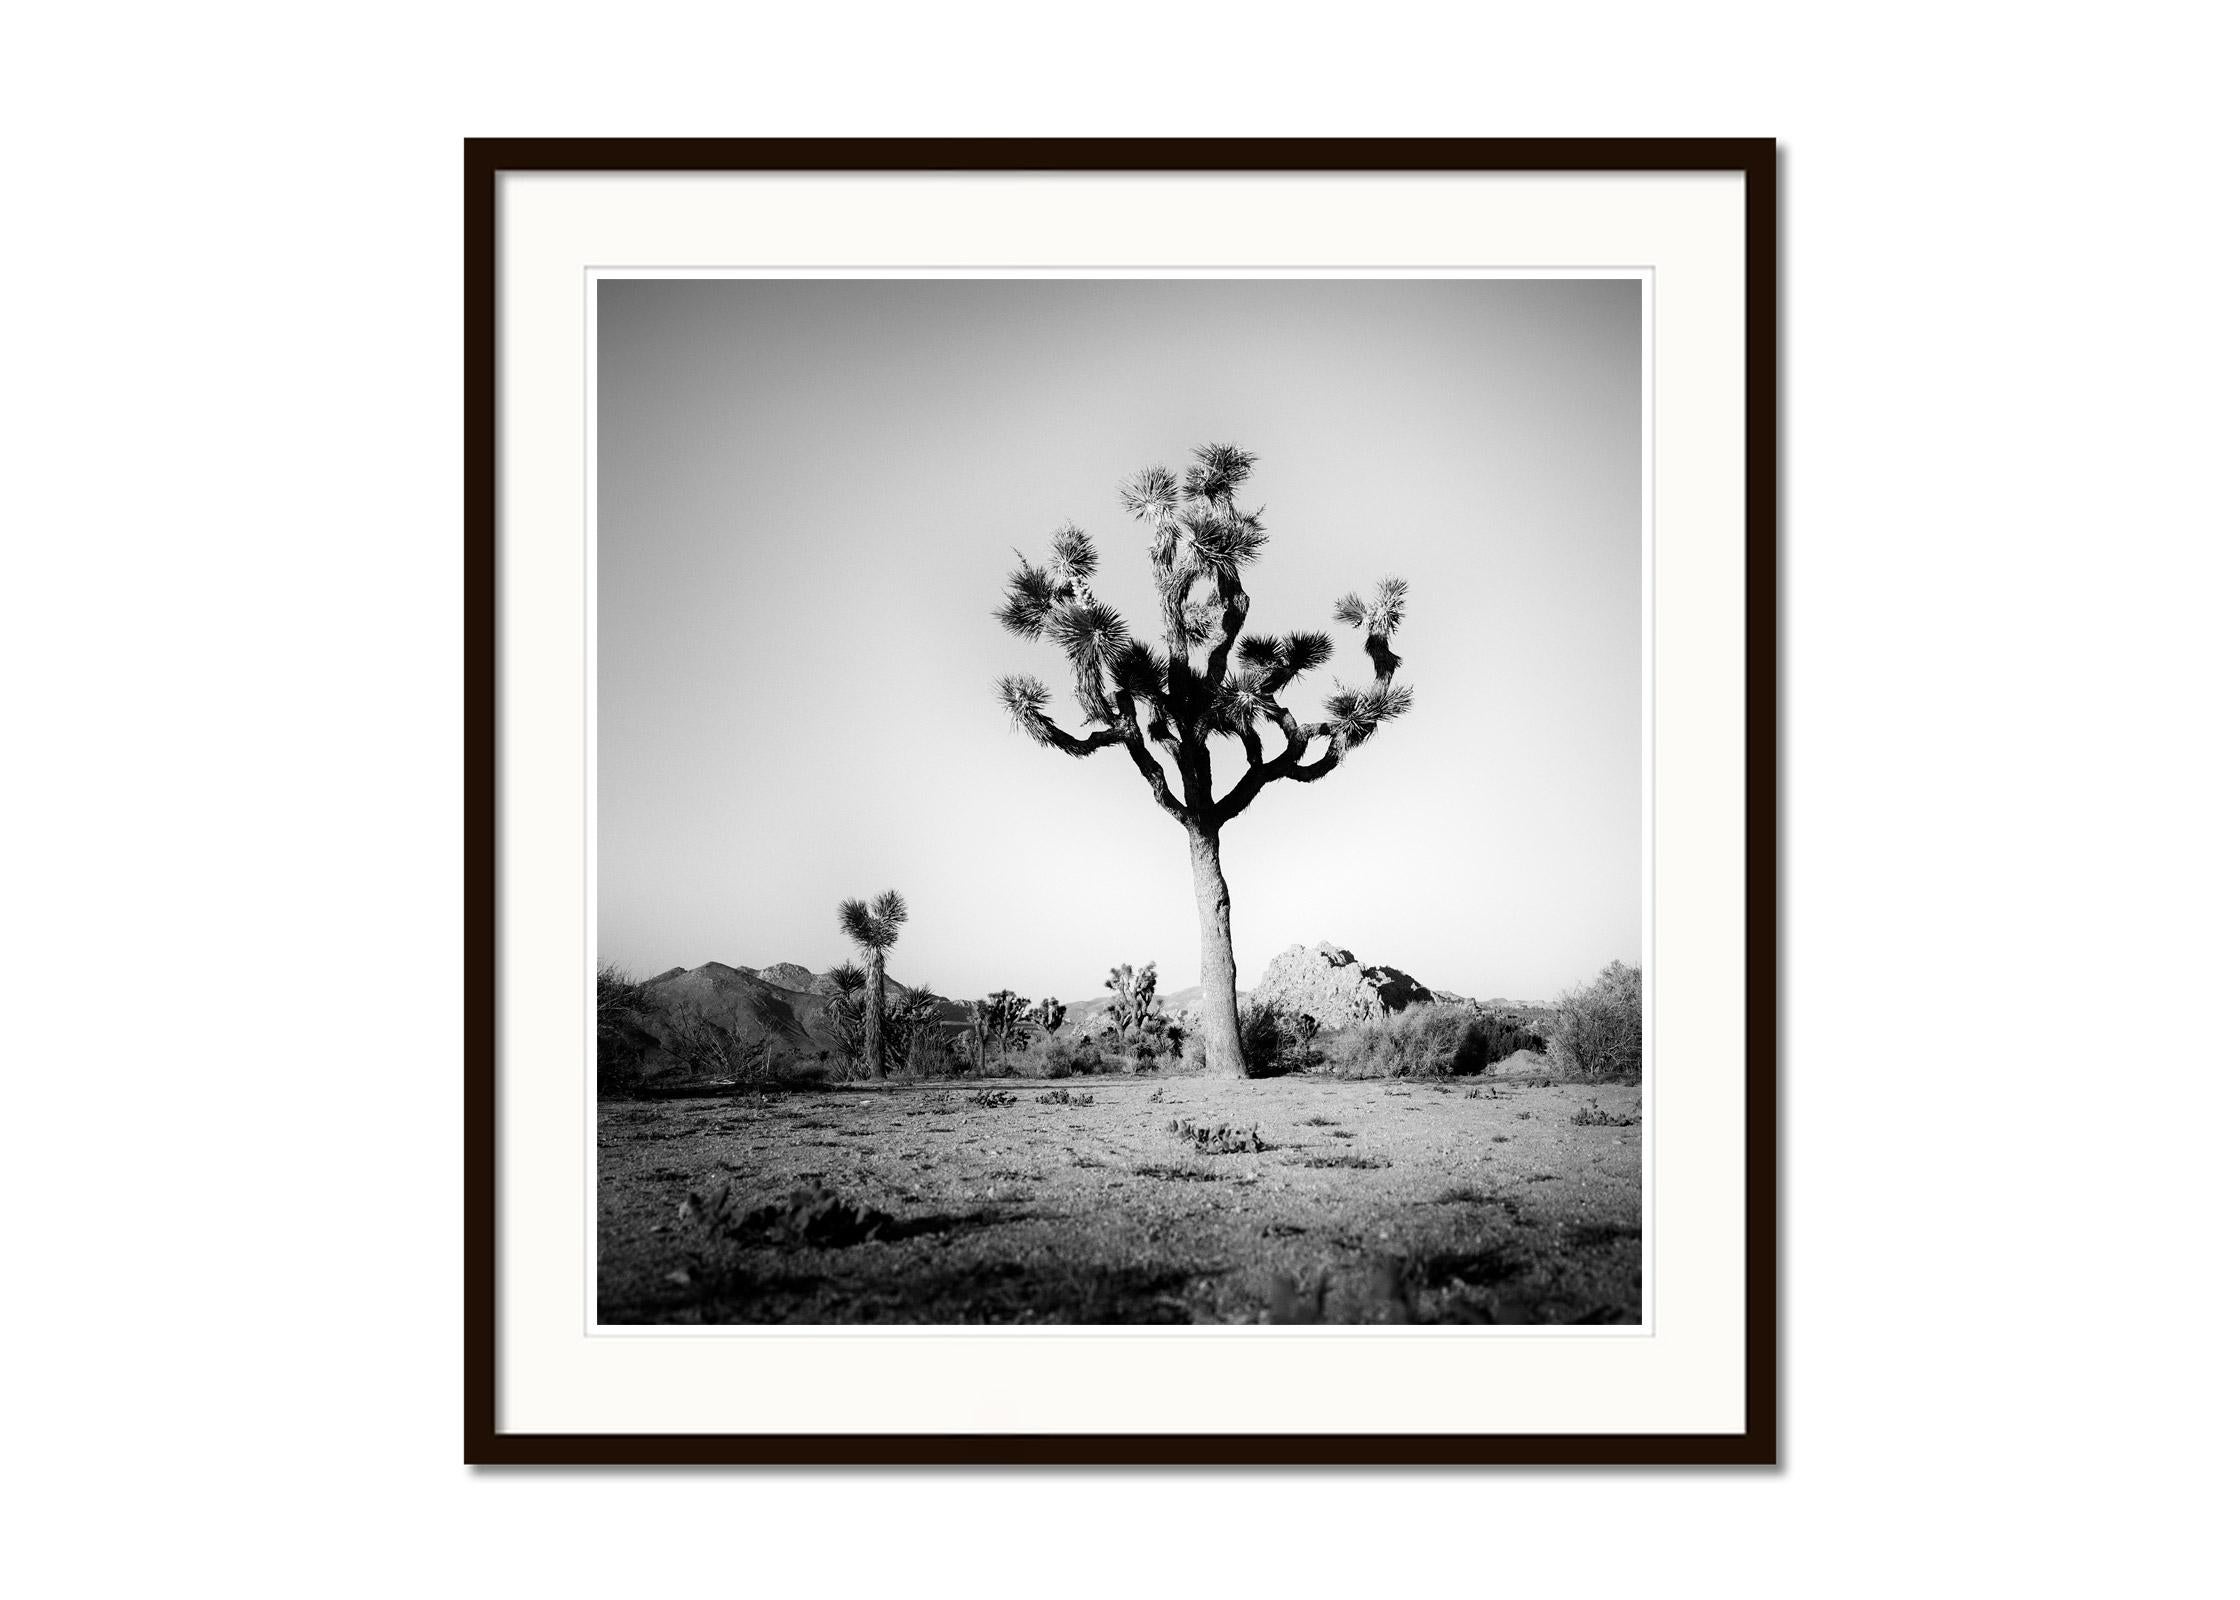 Joshua Tree, National Park, California, USA, B&W landscape photography art print - Gray Landscape Photograph by Gerald Berghammer